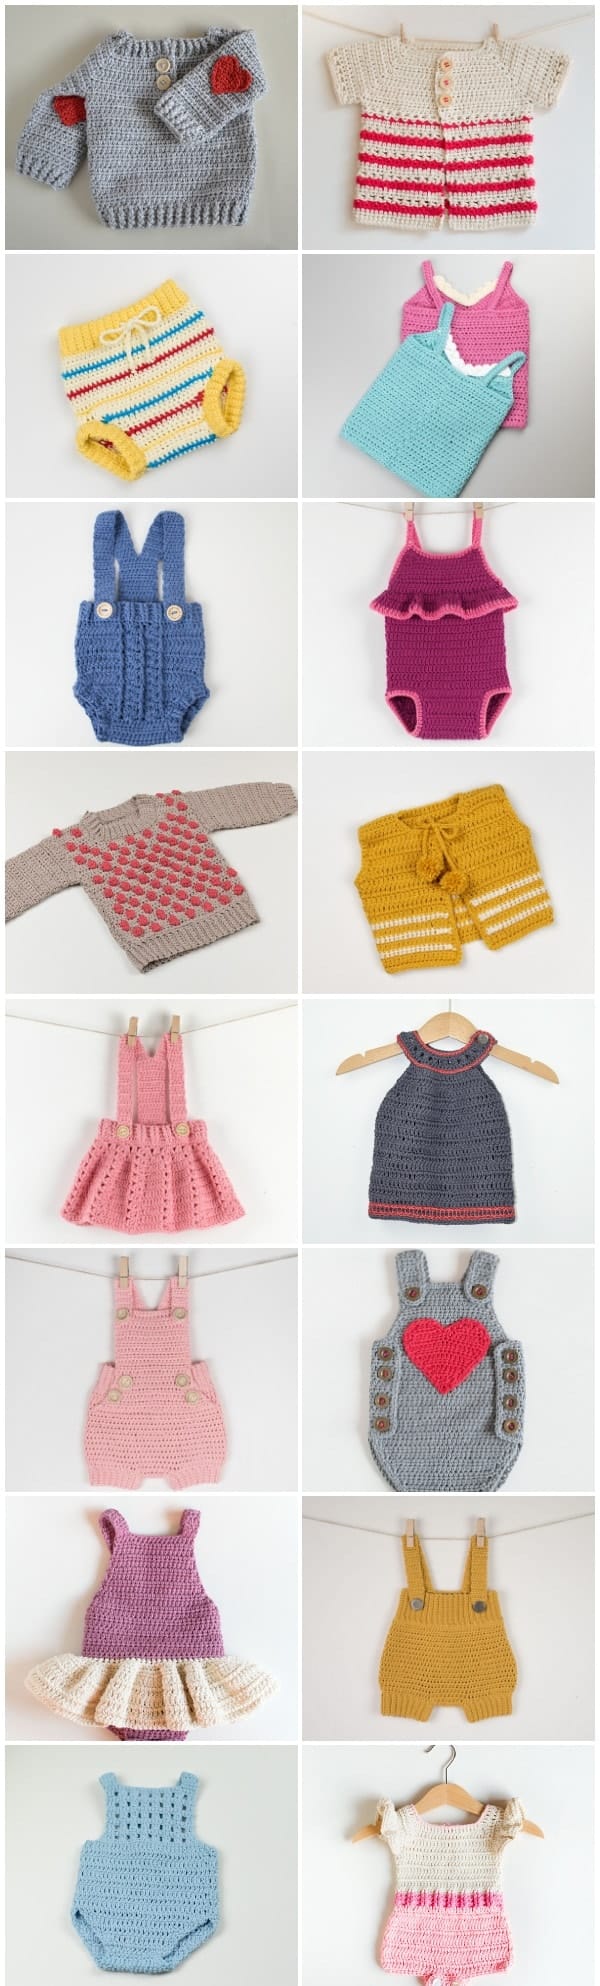 crochet baby costumes patterns